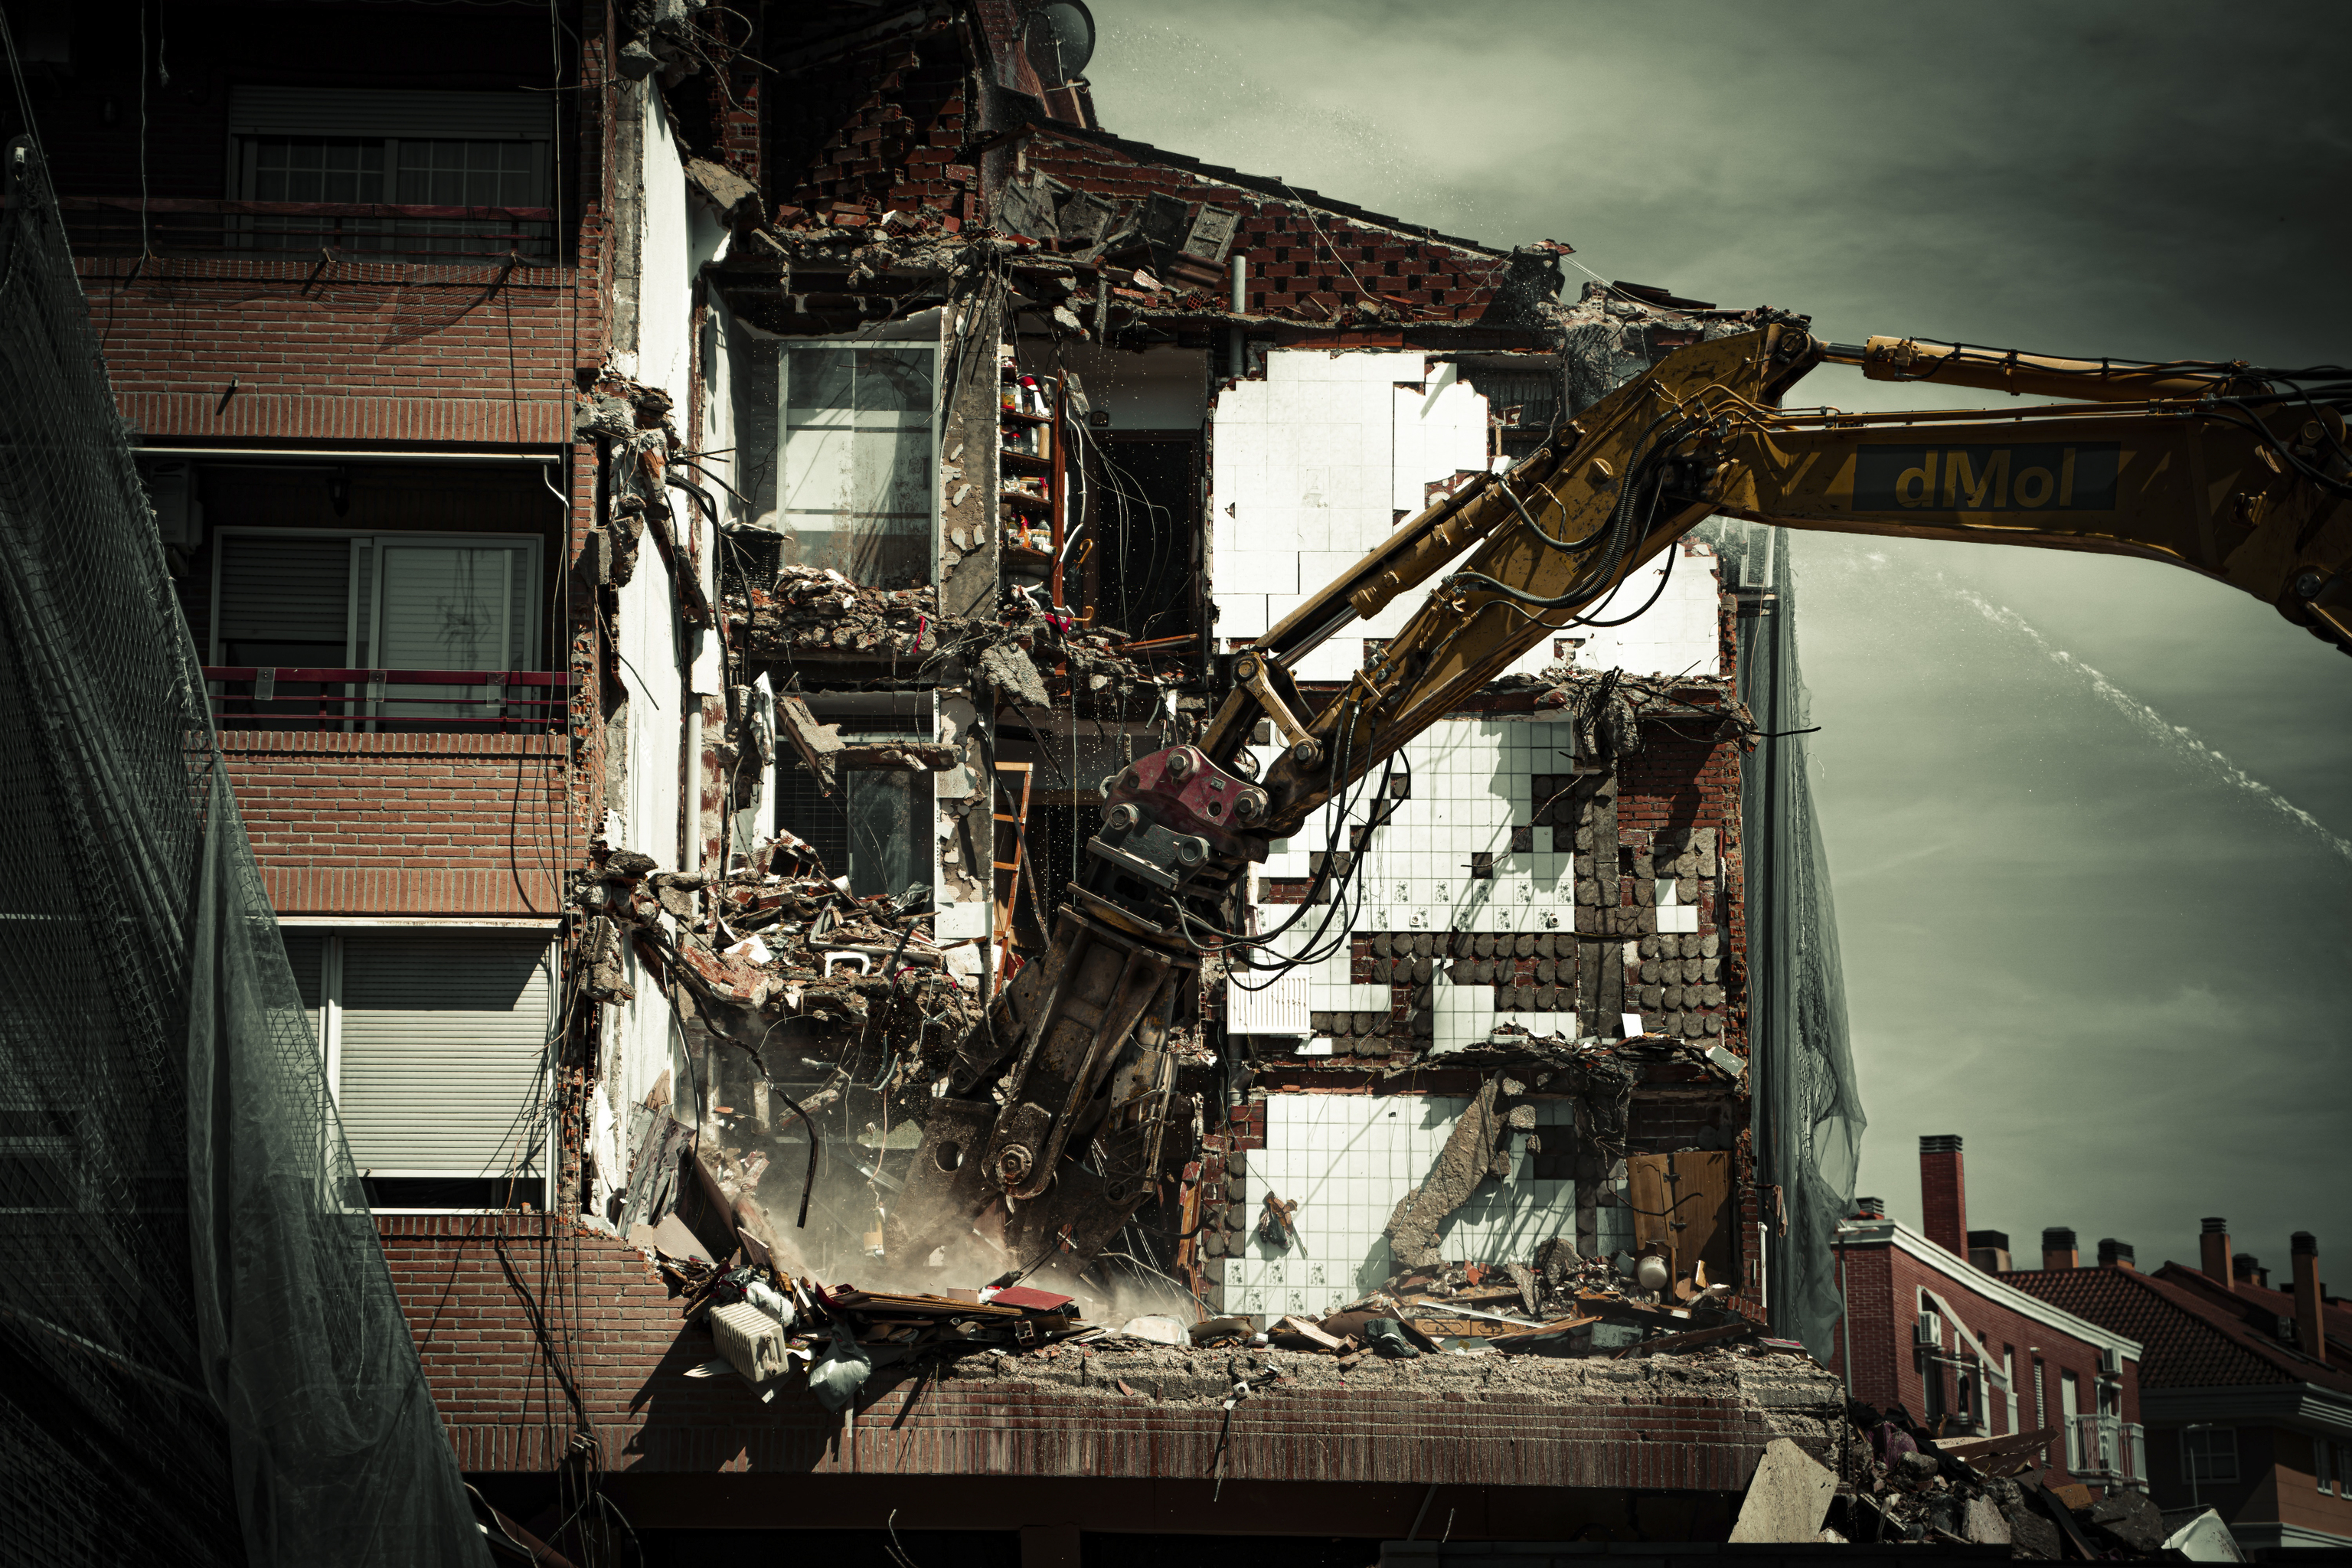 The Rafael Alberti 1 building being demolished.